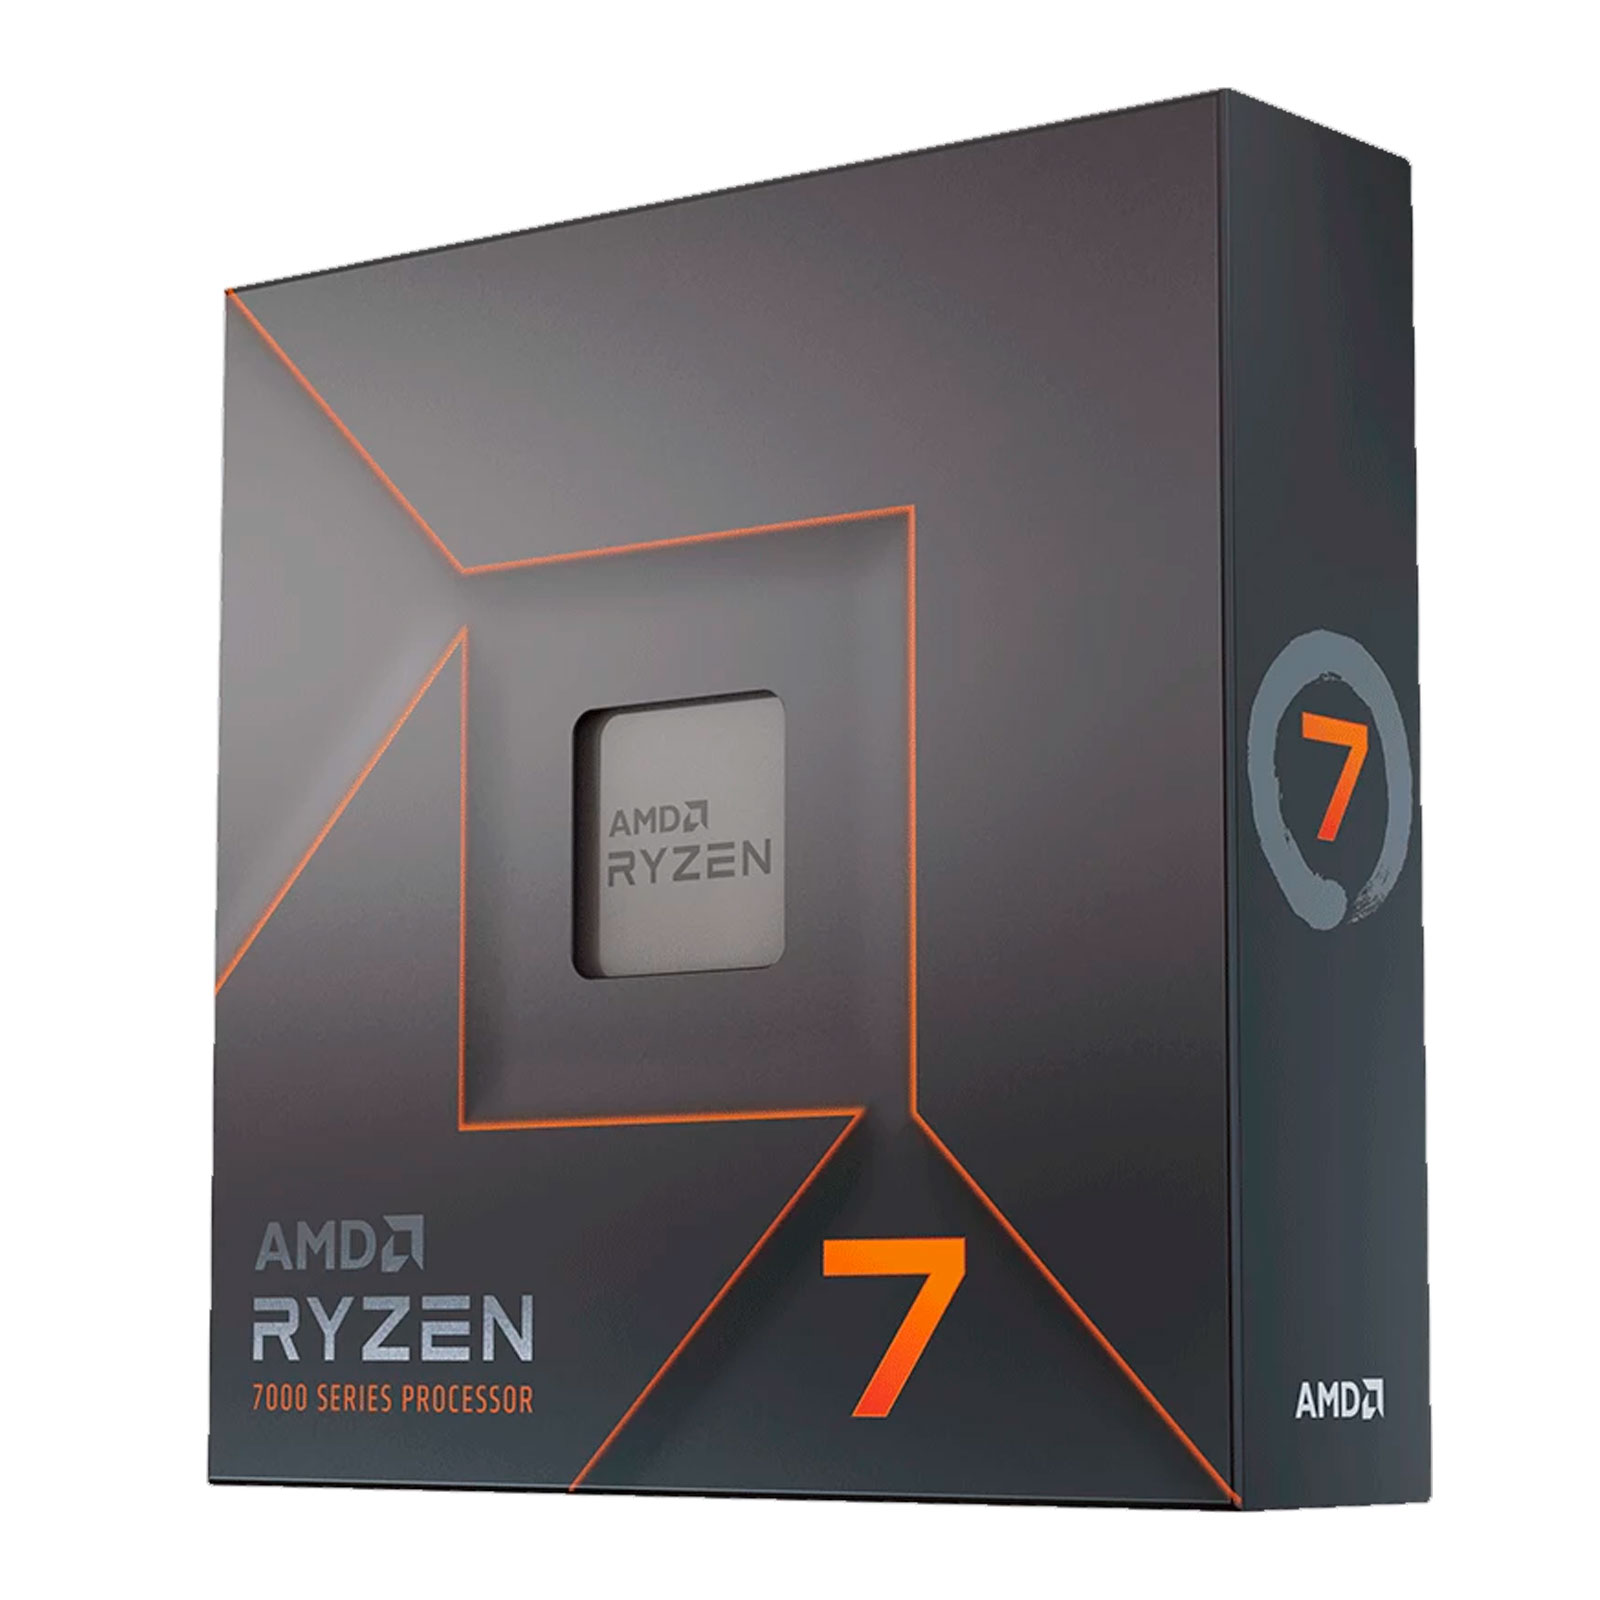 Procesor AMD RYZEN 7 7700X - Clones y Periféricos